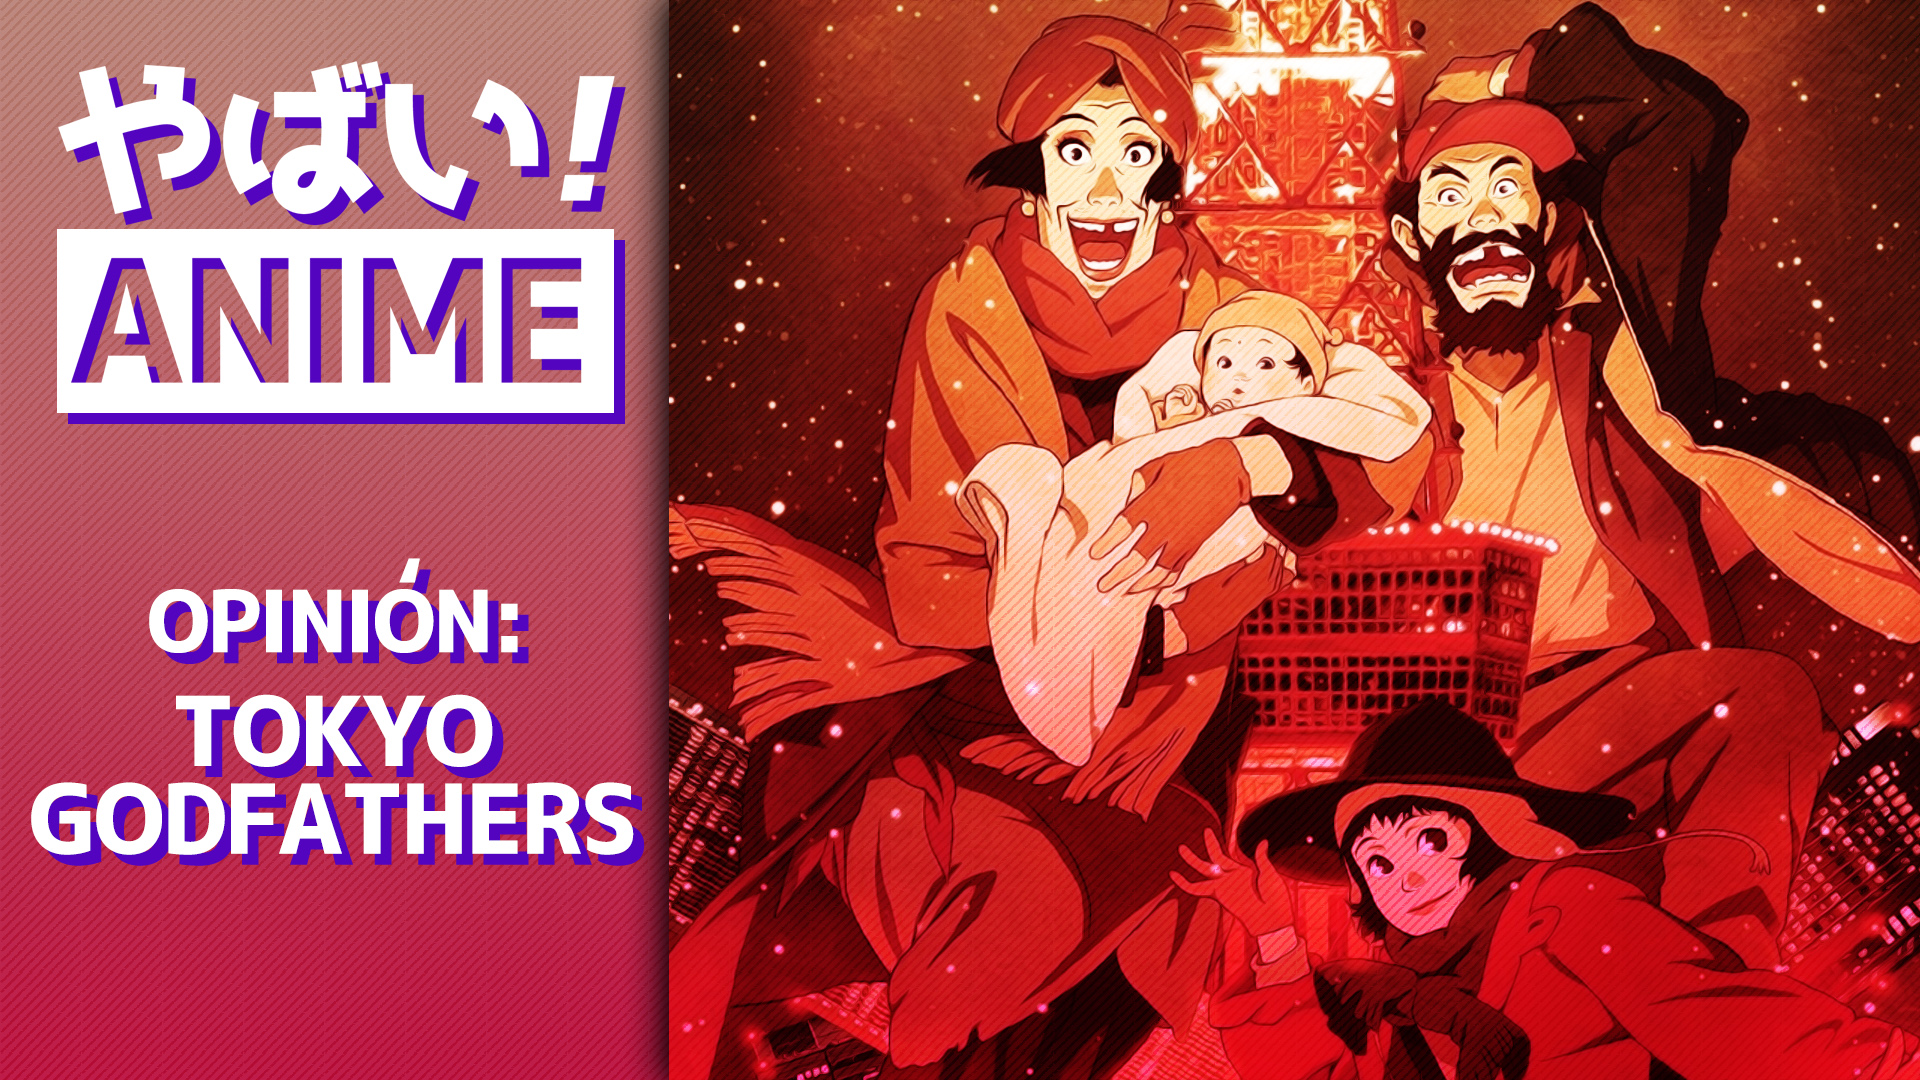 Tokyo Godfathers – Yabai! Anime